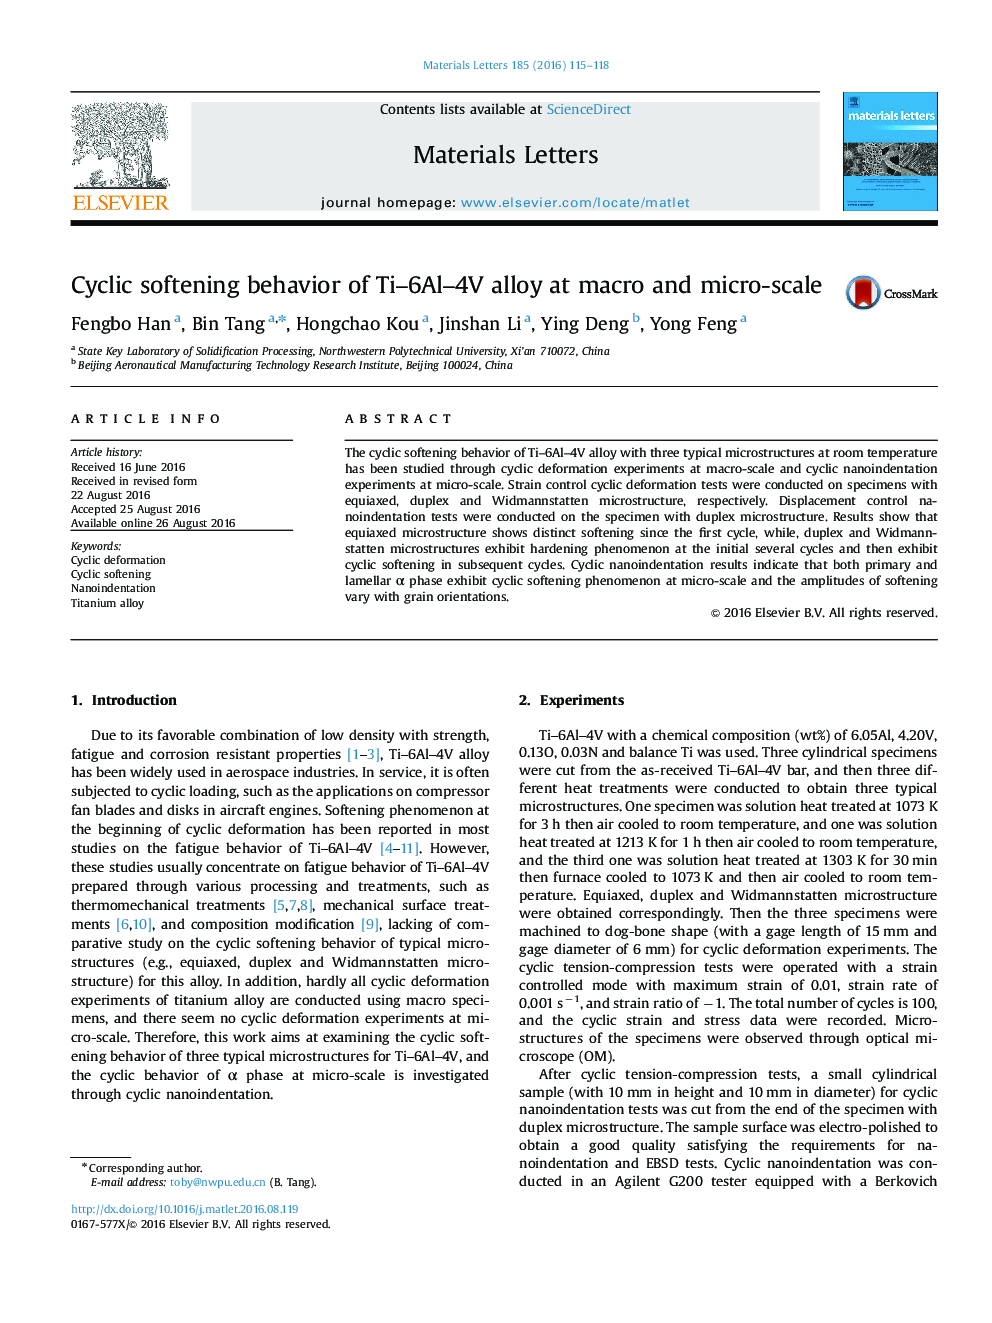 Cyclic softening behavior of Ti-6Al-4V alloy at macro and micro-scale